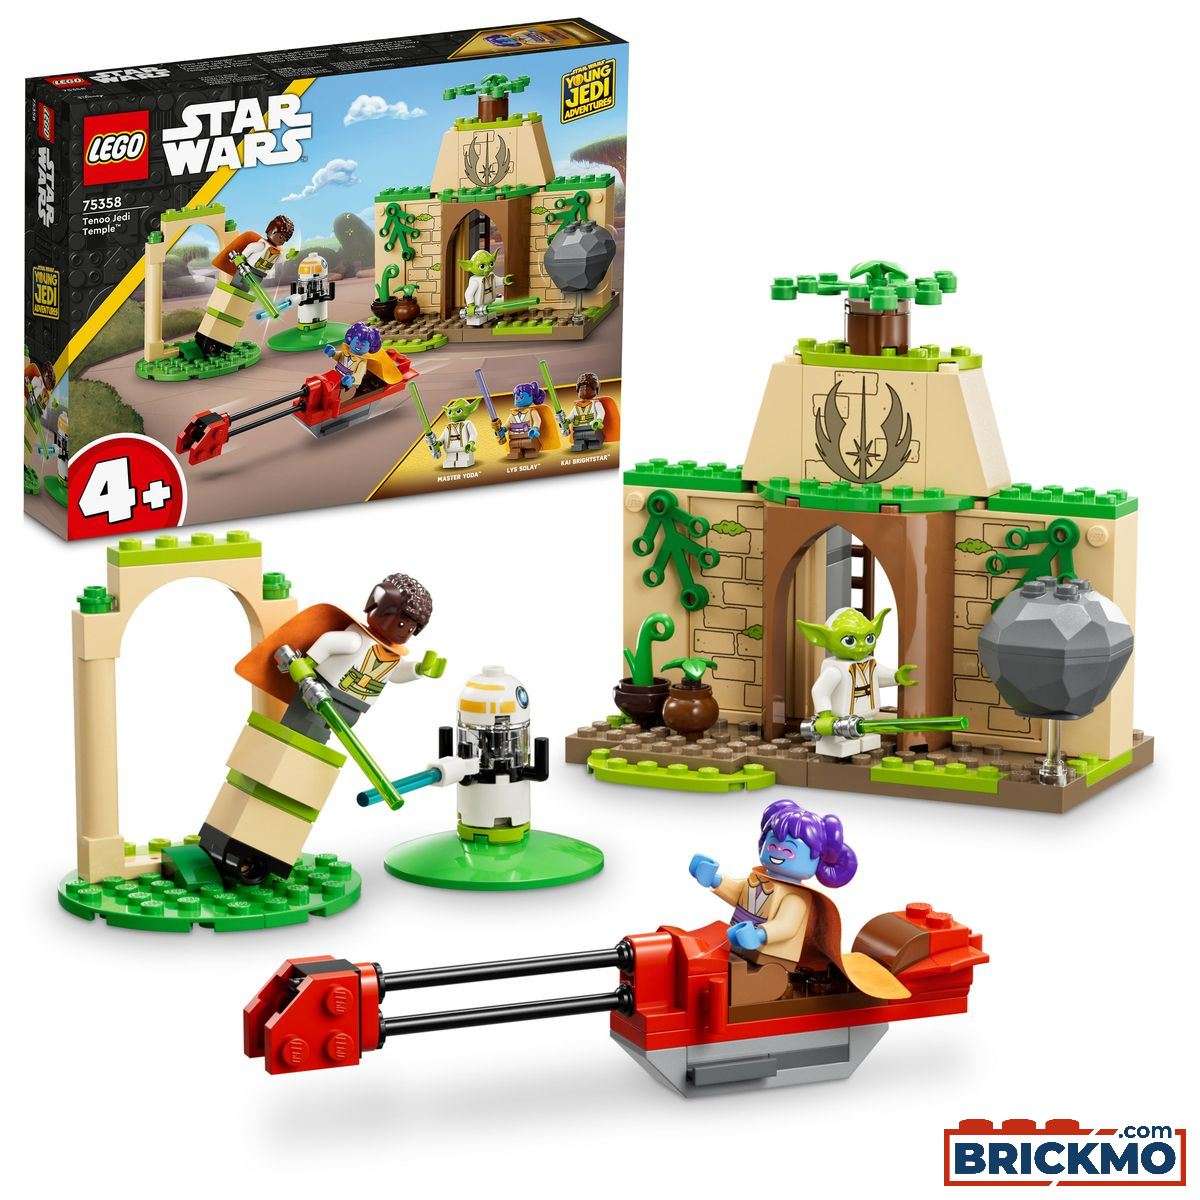 LEGO Star Wars 75358 Tenoo Jedi Temple 75358